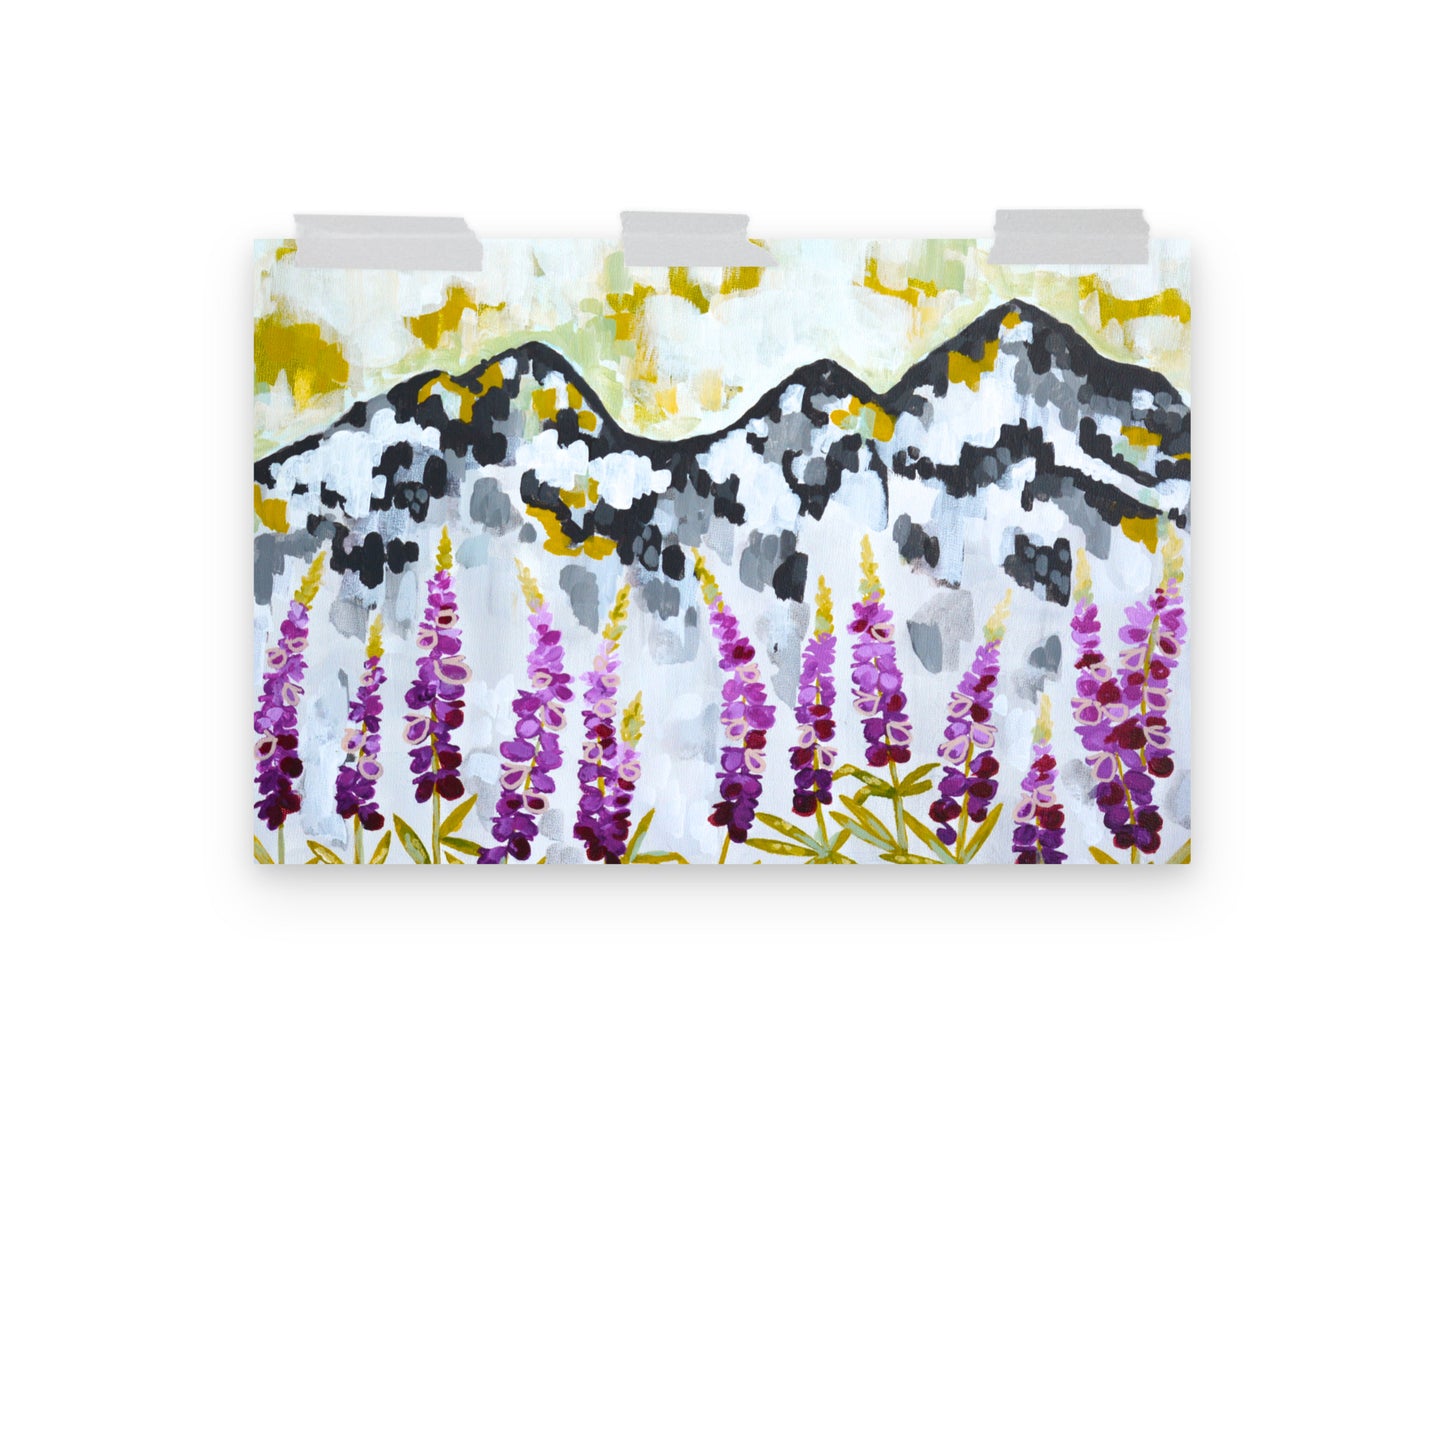 Three Sisters Oregon and Lupine Wildflowers Art Print, Oregon Cascades